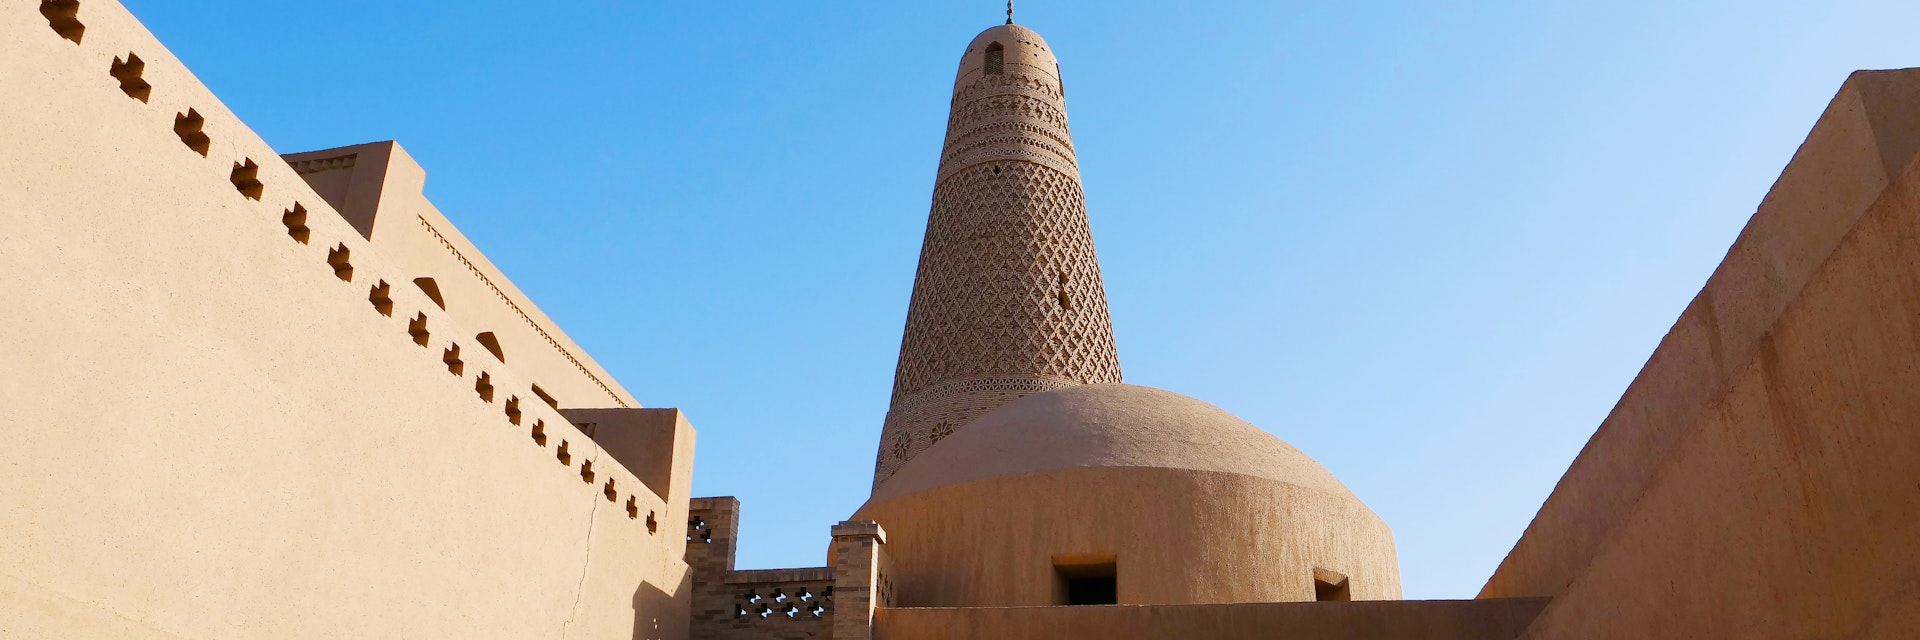 Emin minaret or Sugong tower in Turpan. the largest ancient Islamic tower in Turpan Xinjiang, China.